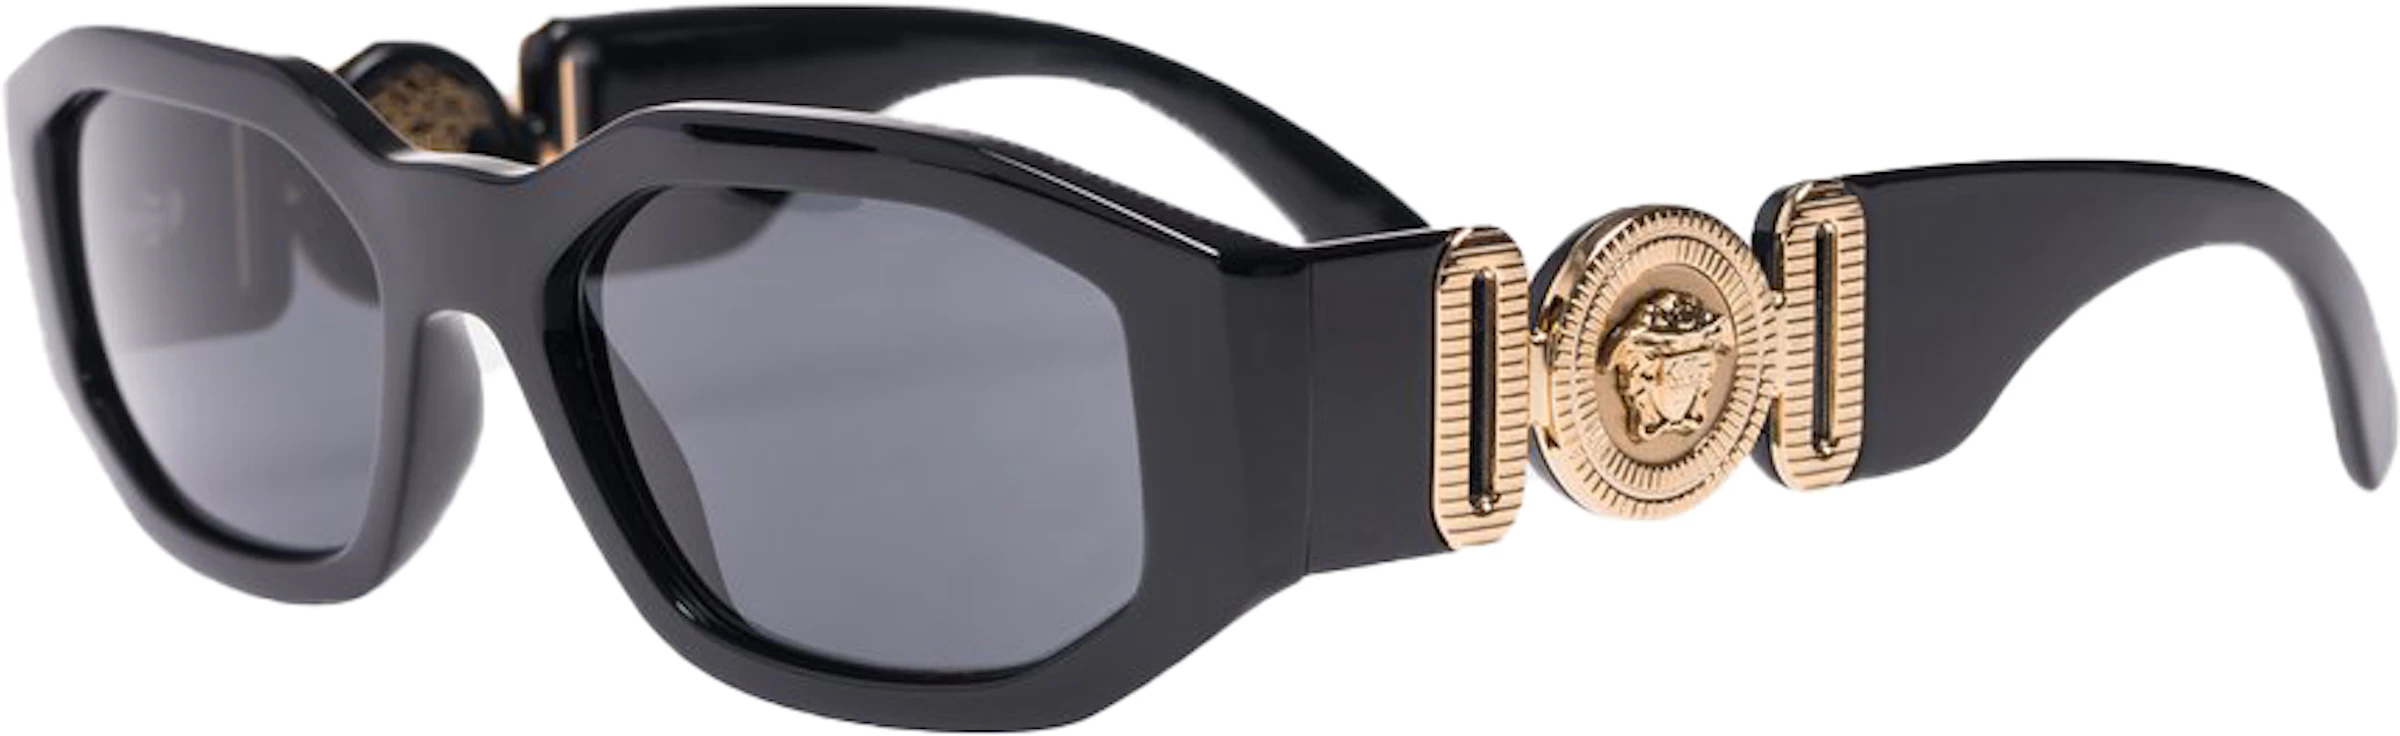 Black Gold Versace Sunglasses | vlr.eng.br